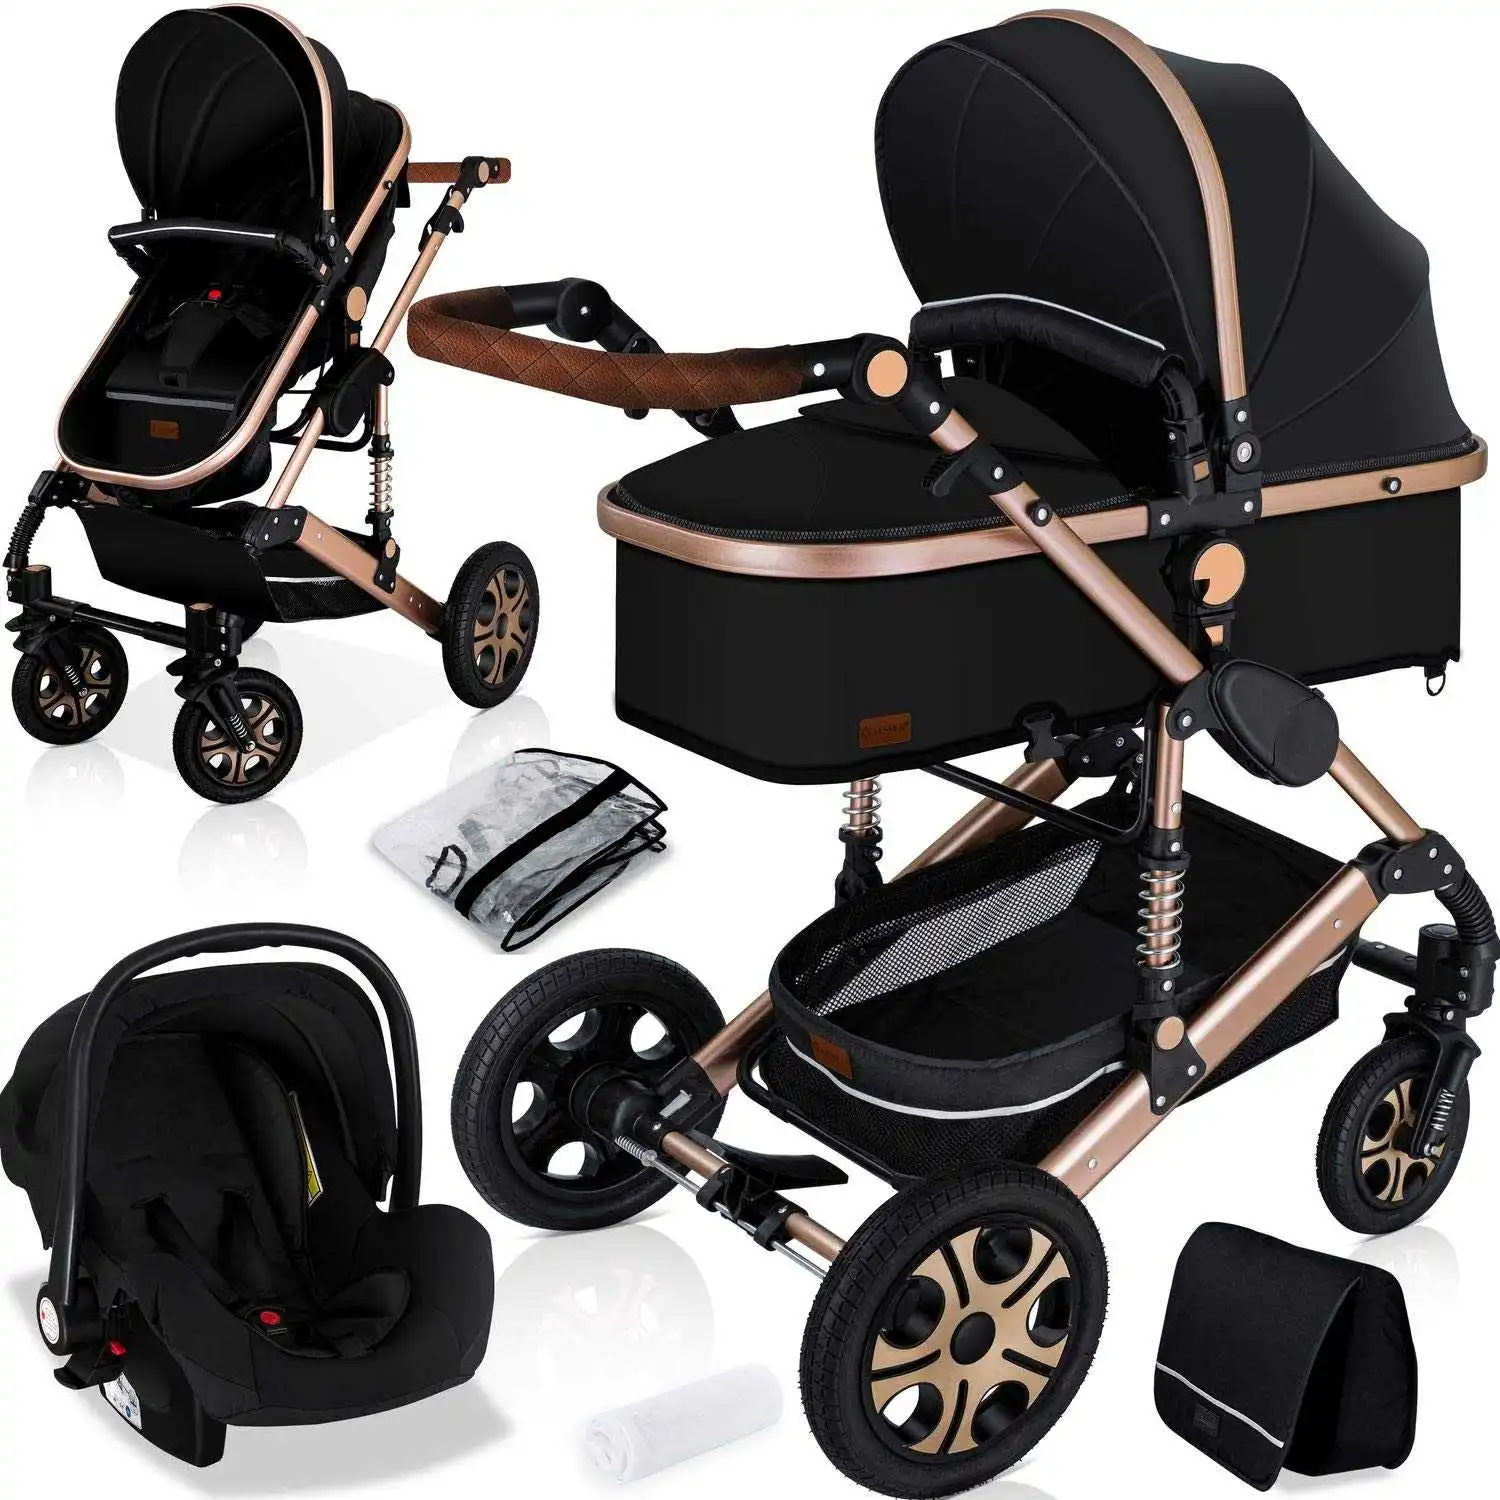 Fashionable Baby Kinderwagen 3 In 1 Stroller Luxury Pram For Newborn - Belecoo Stroller,Foldable 3 In 1 Baby Stroller With Carseat,Baby Stroller 3 In 1 Luxury Baby Pram Product on Alibaba.com